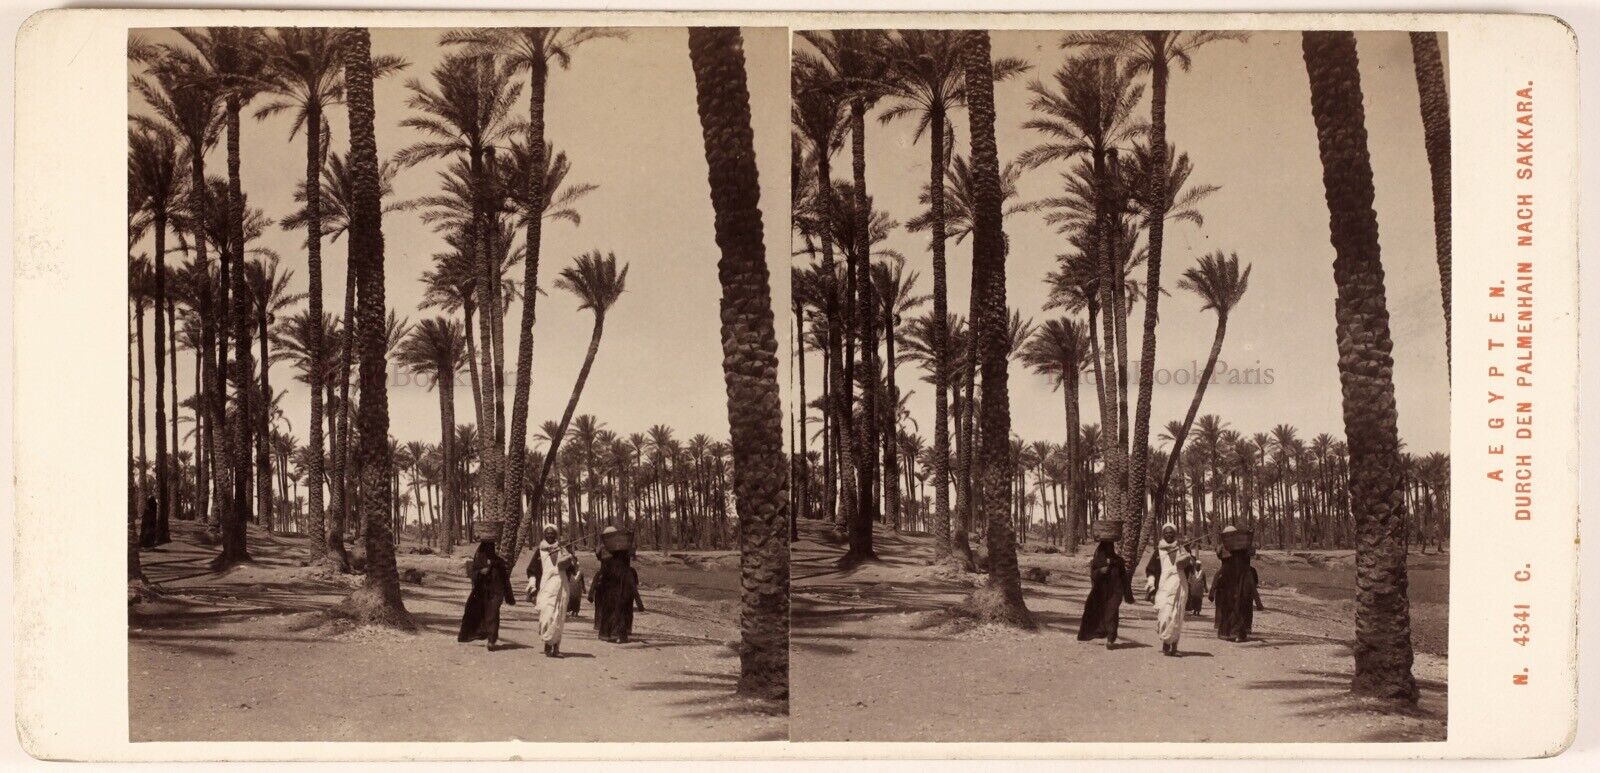 EEGYPT Palm Grove Saqqara Photo Alois Beer Stereo Vintage Albumin c1880